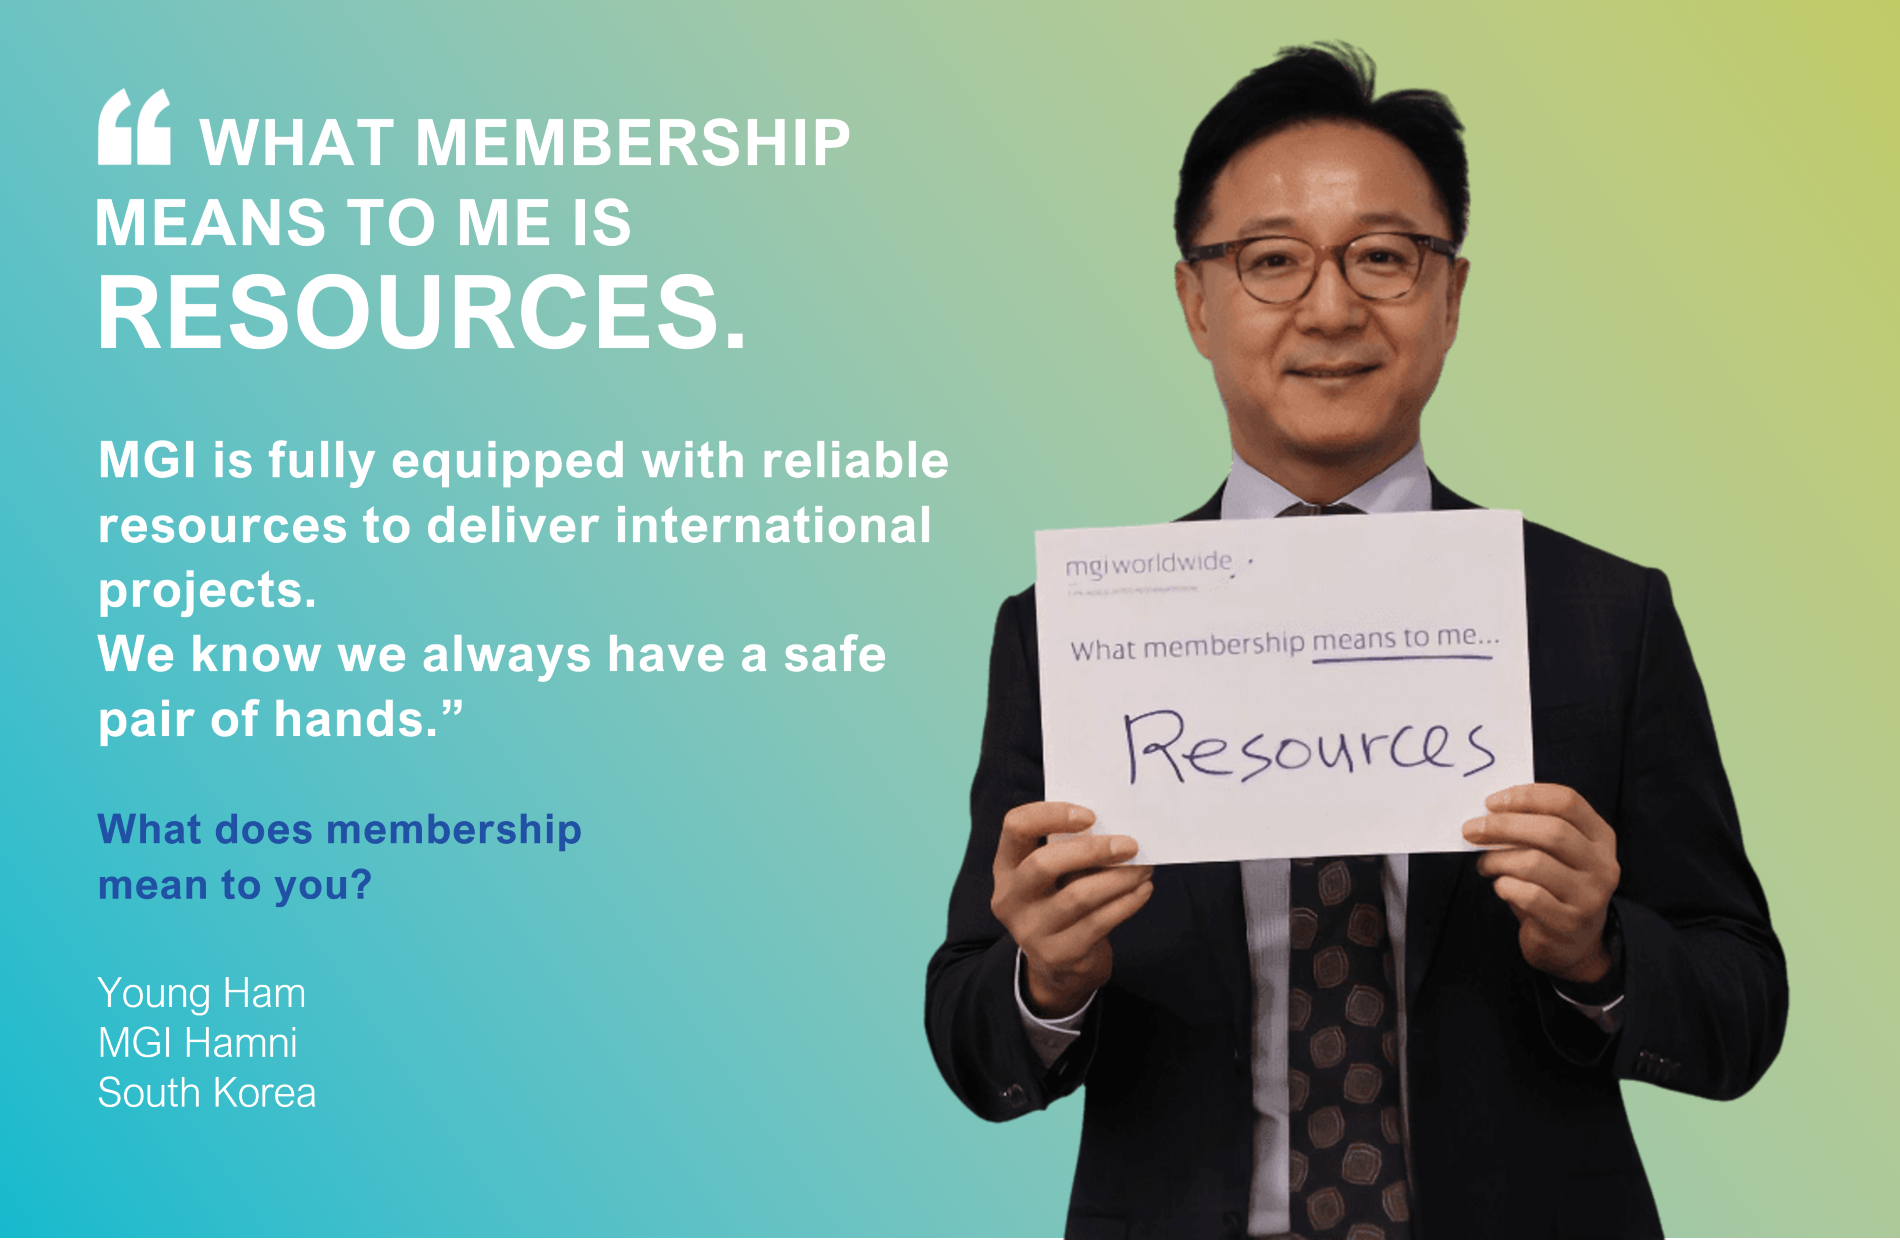 Membership means Resources to Young Ham of MGI Hanmi, South Korea